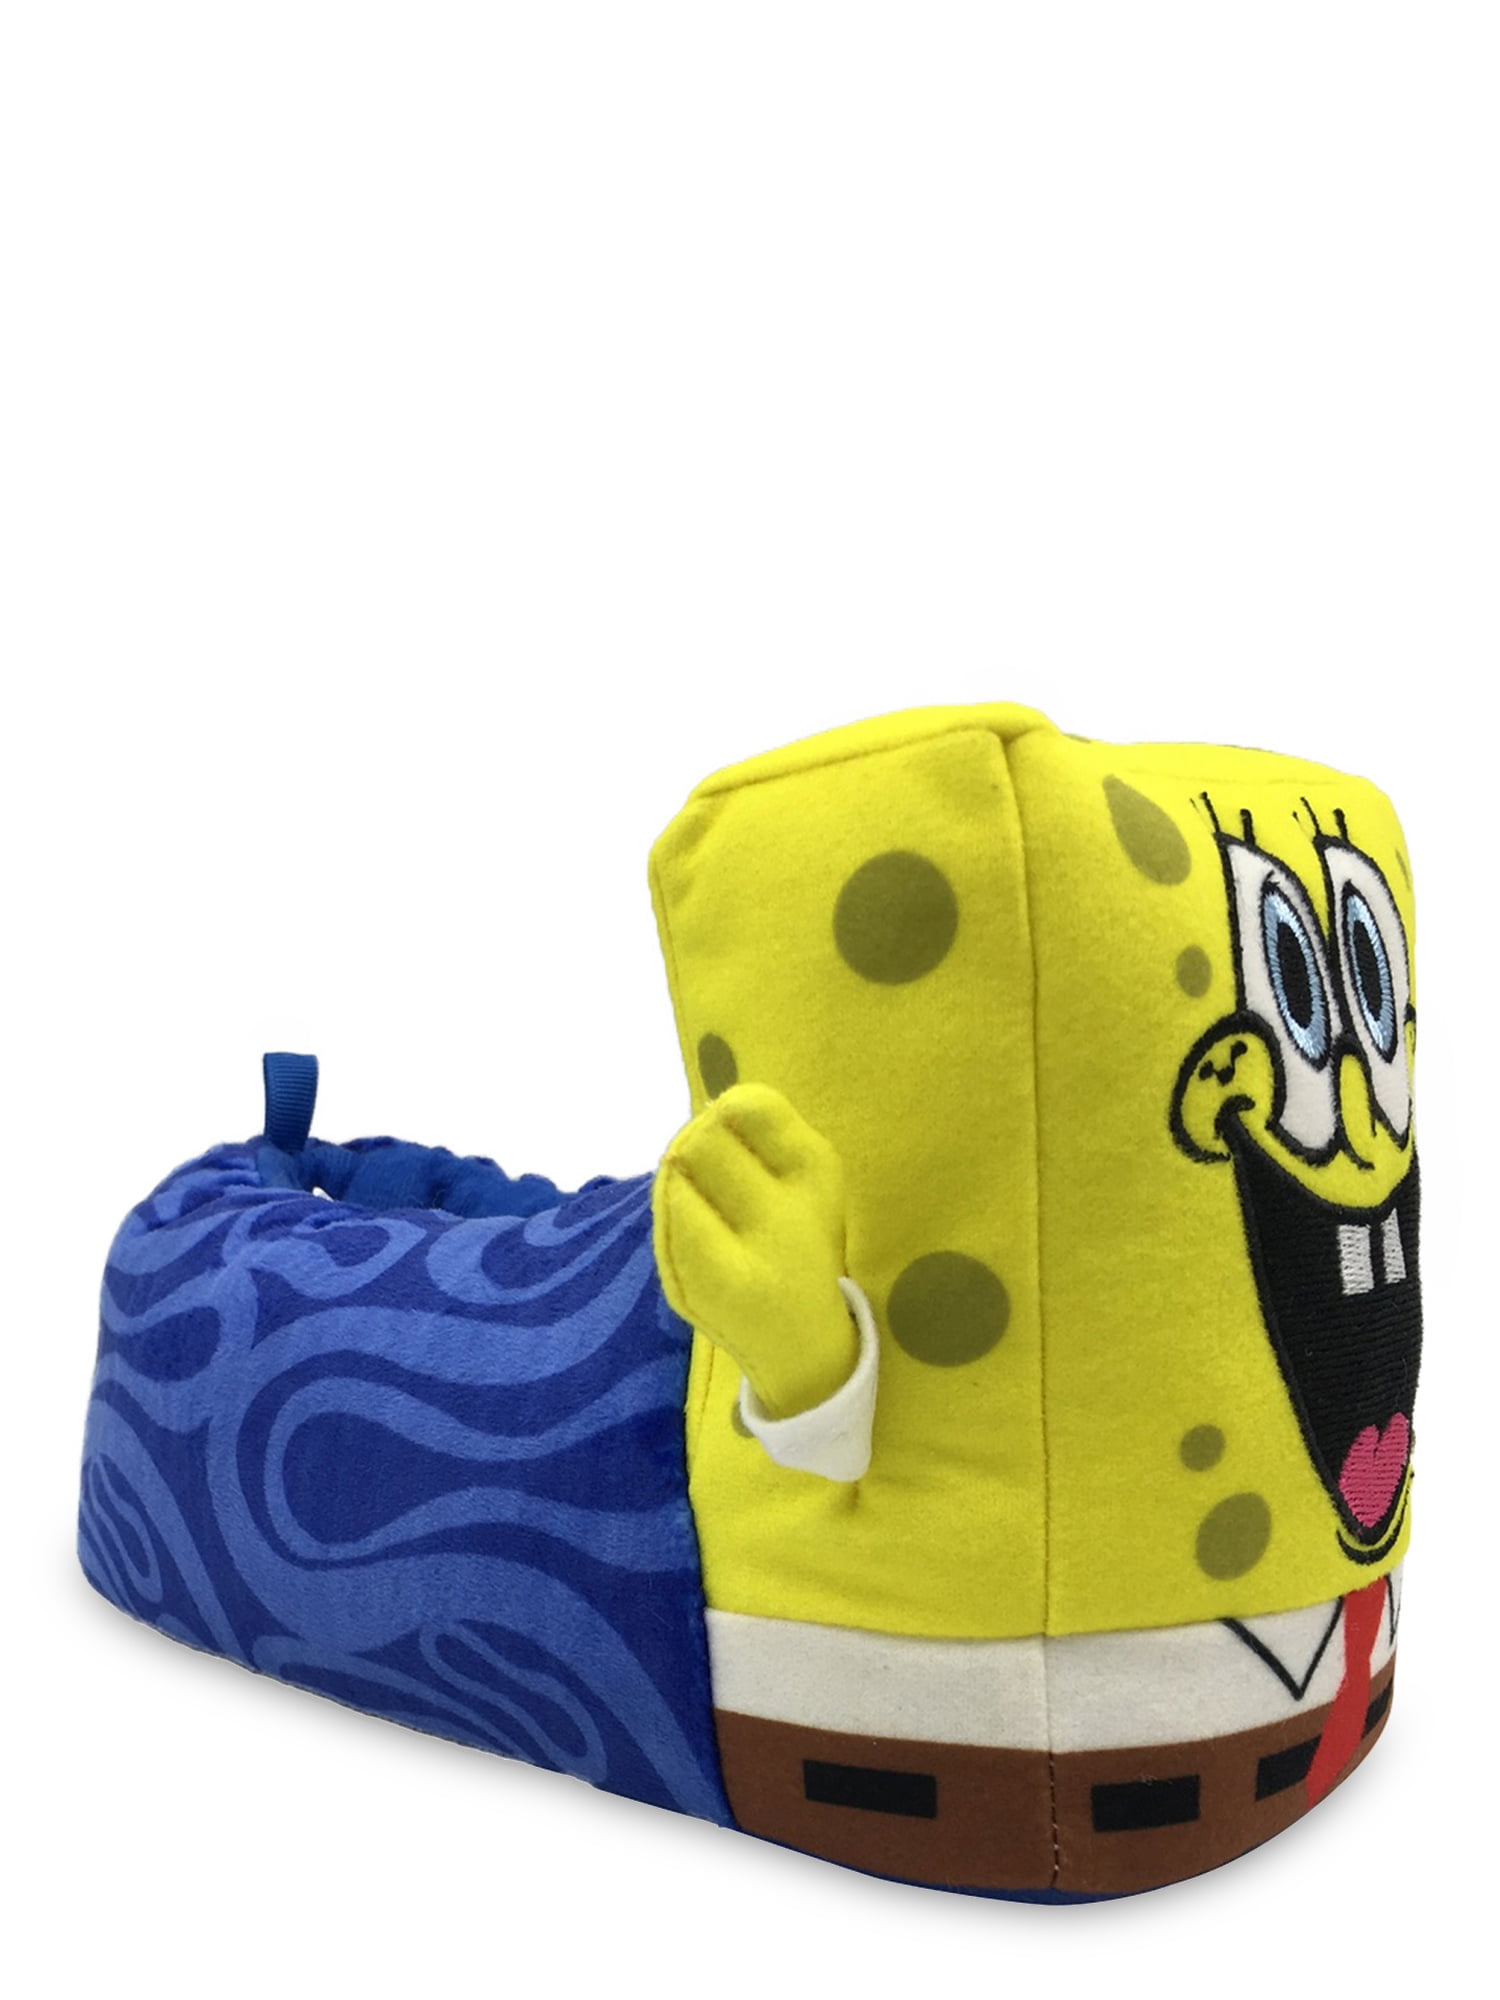 Spongebob Squarepants Costume Plush Doll Fancy Shoes indoor Slippers One Size 